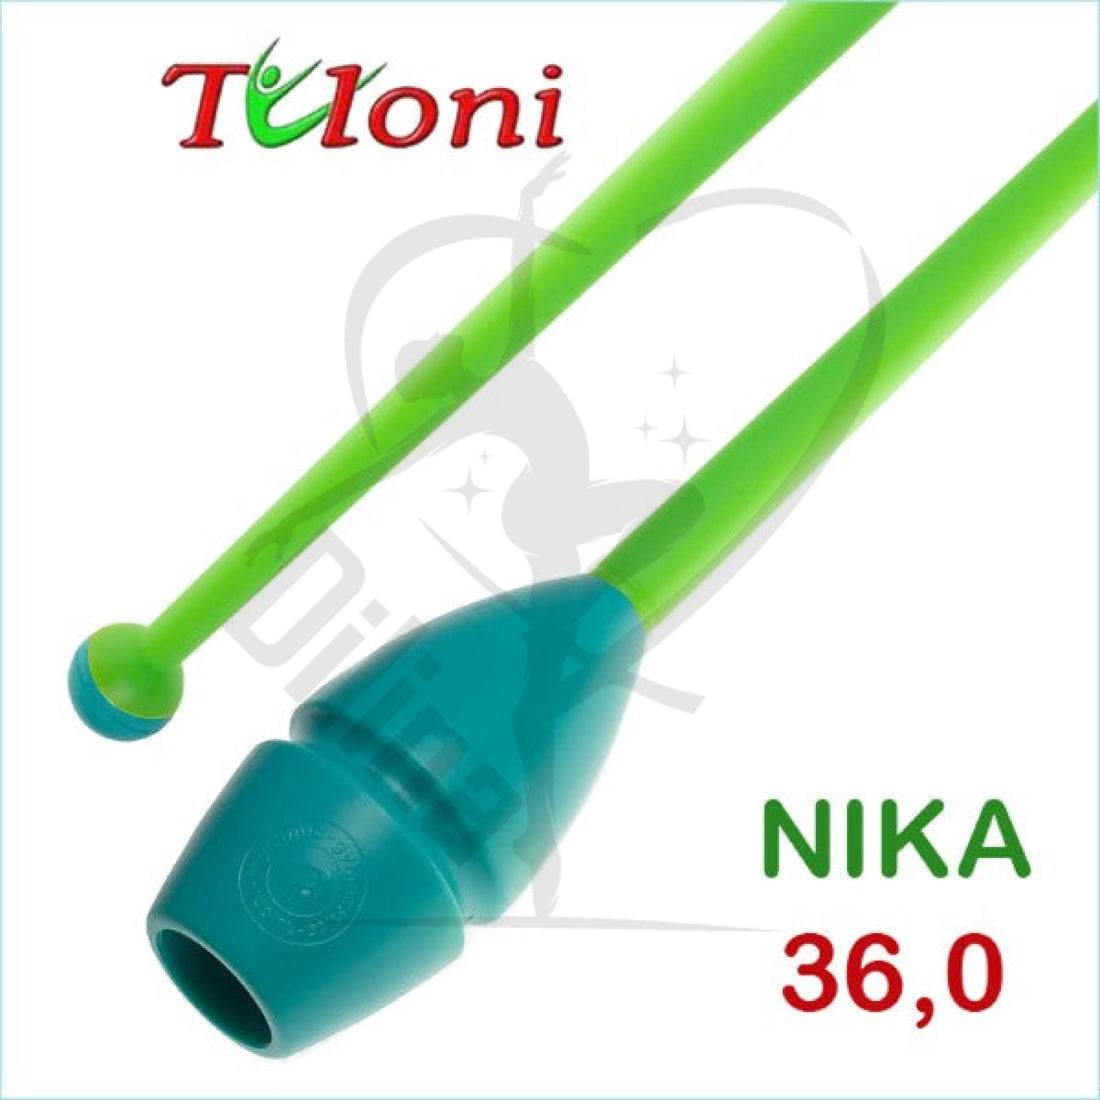 Tuloni Bi-Colour Connectable Clubs Mos. Nika 36Cm